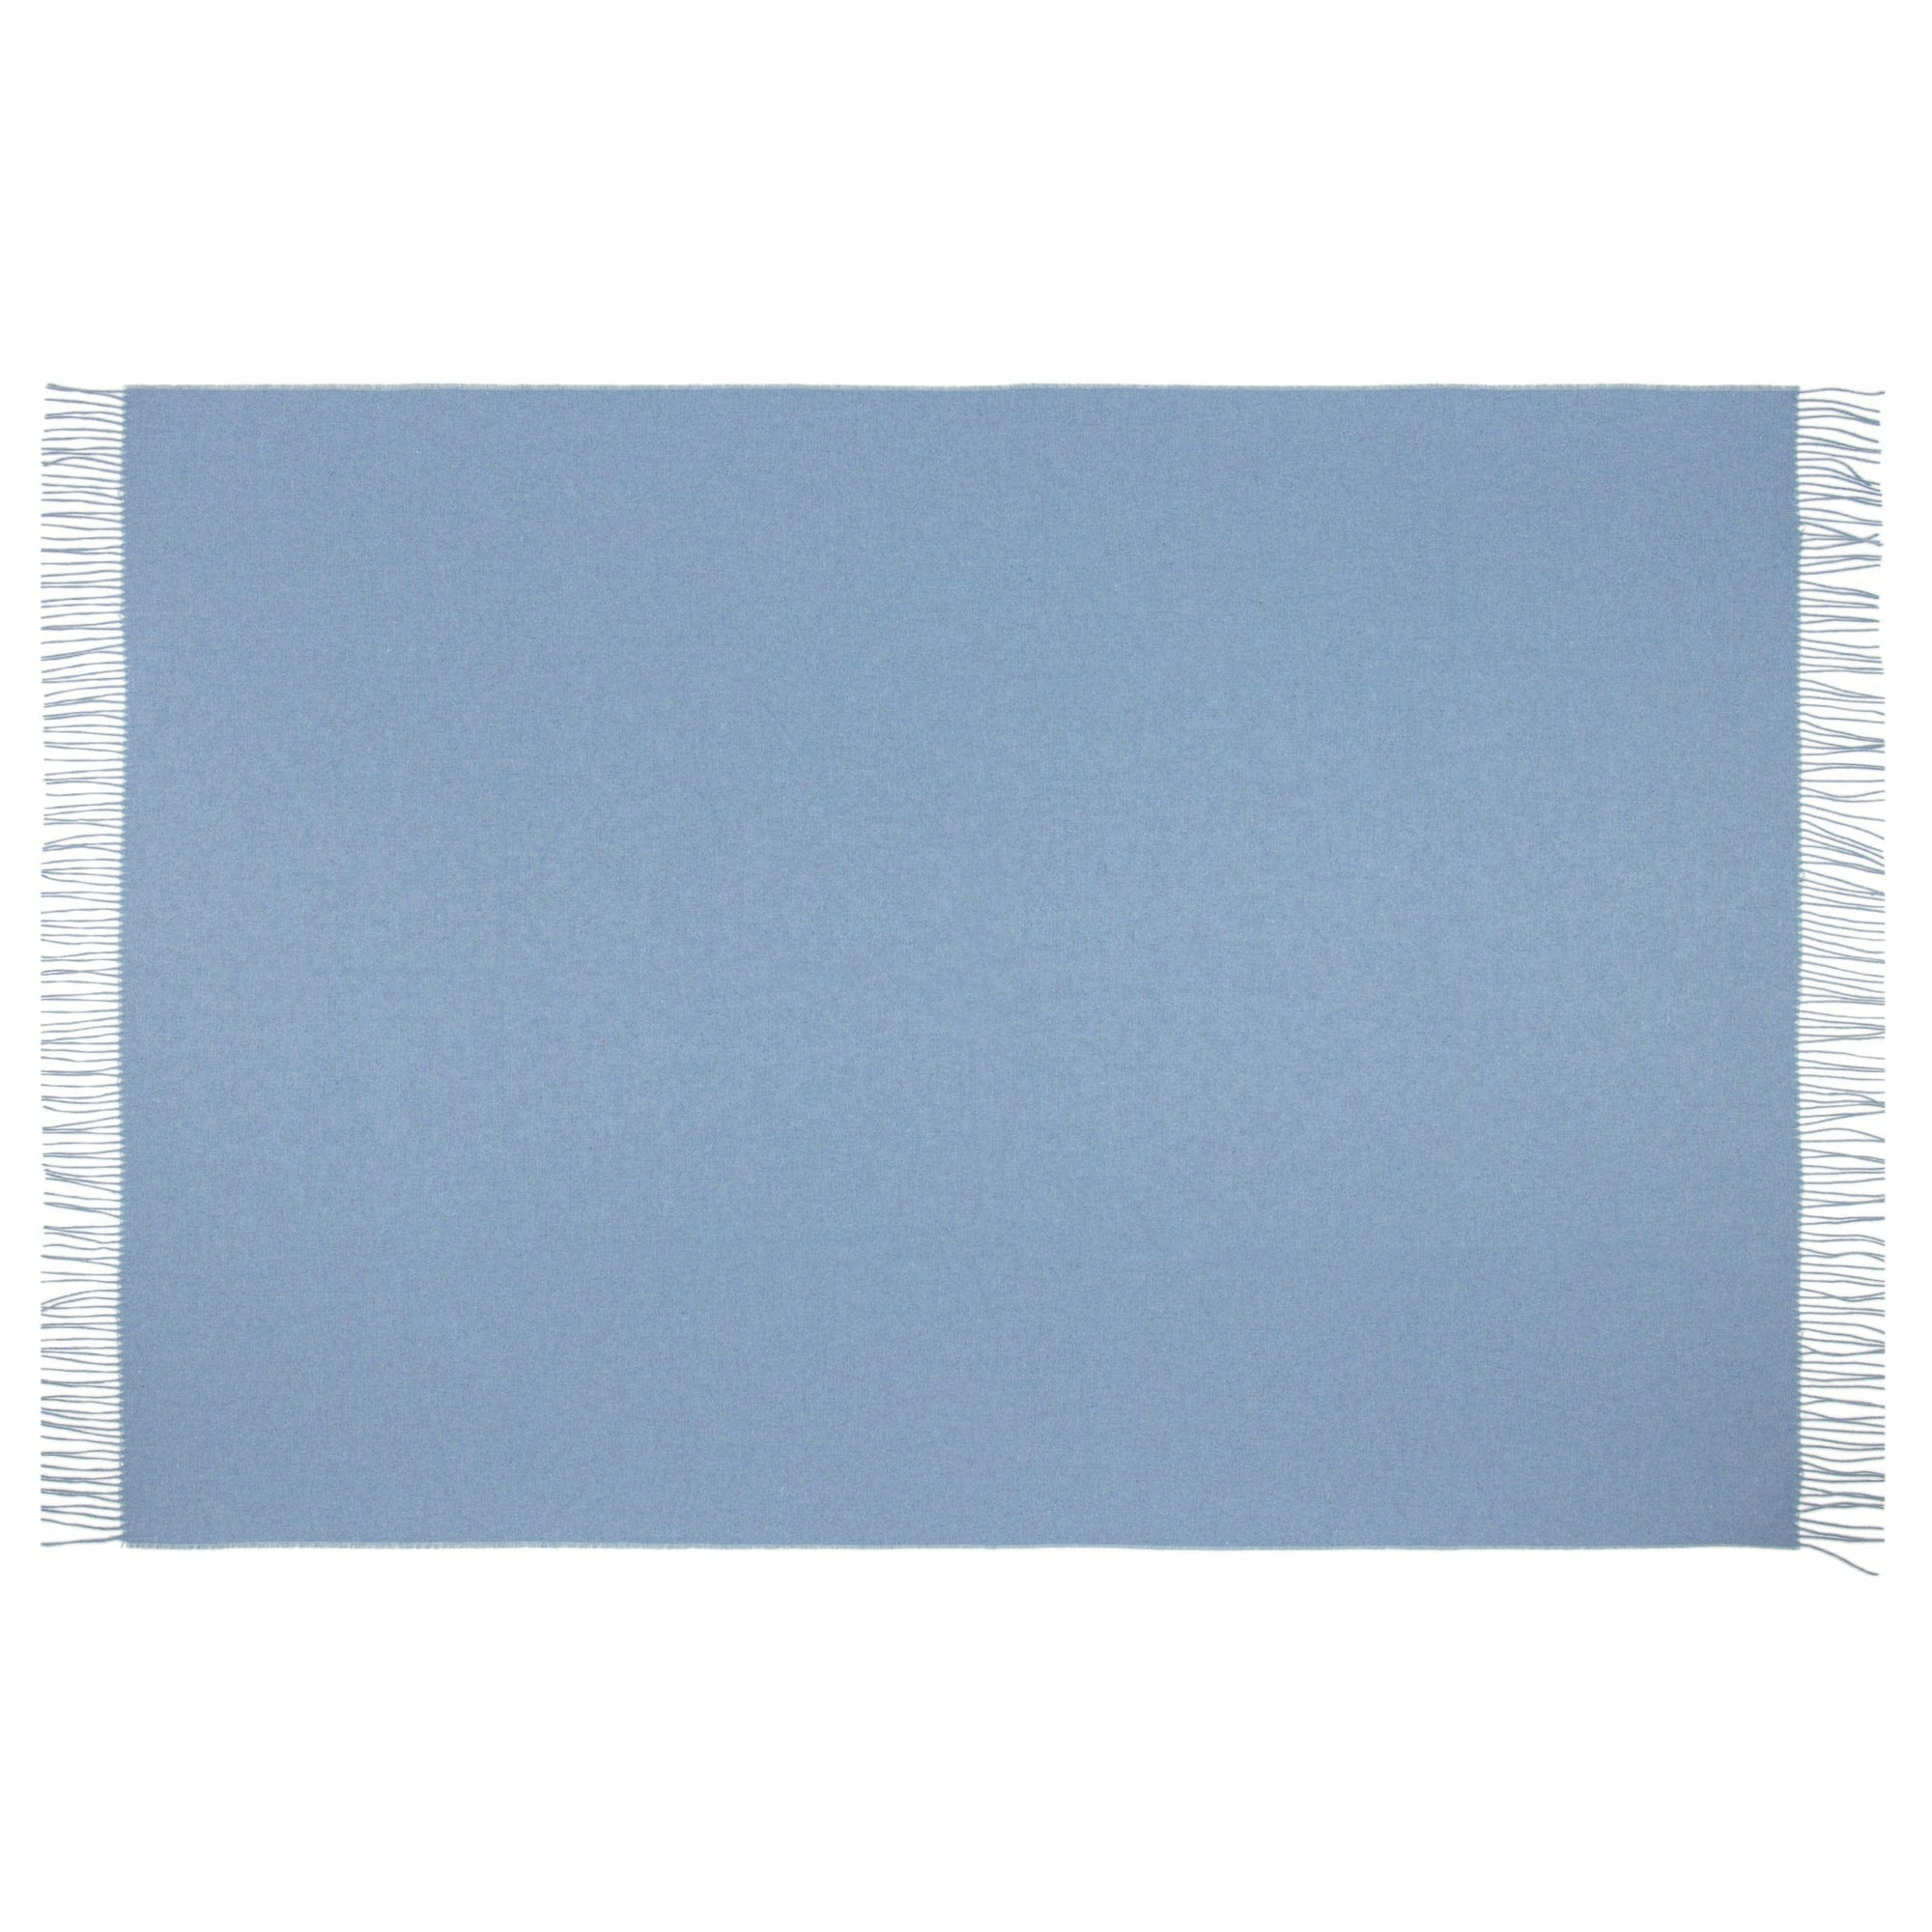 Paddington Throw - Fine Wool Blend - Blue